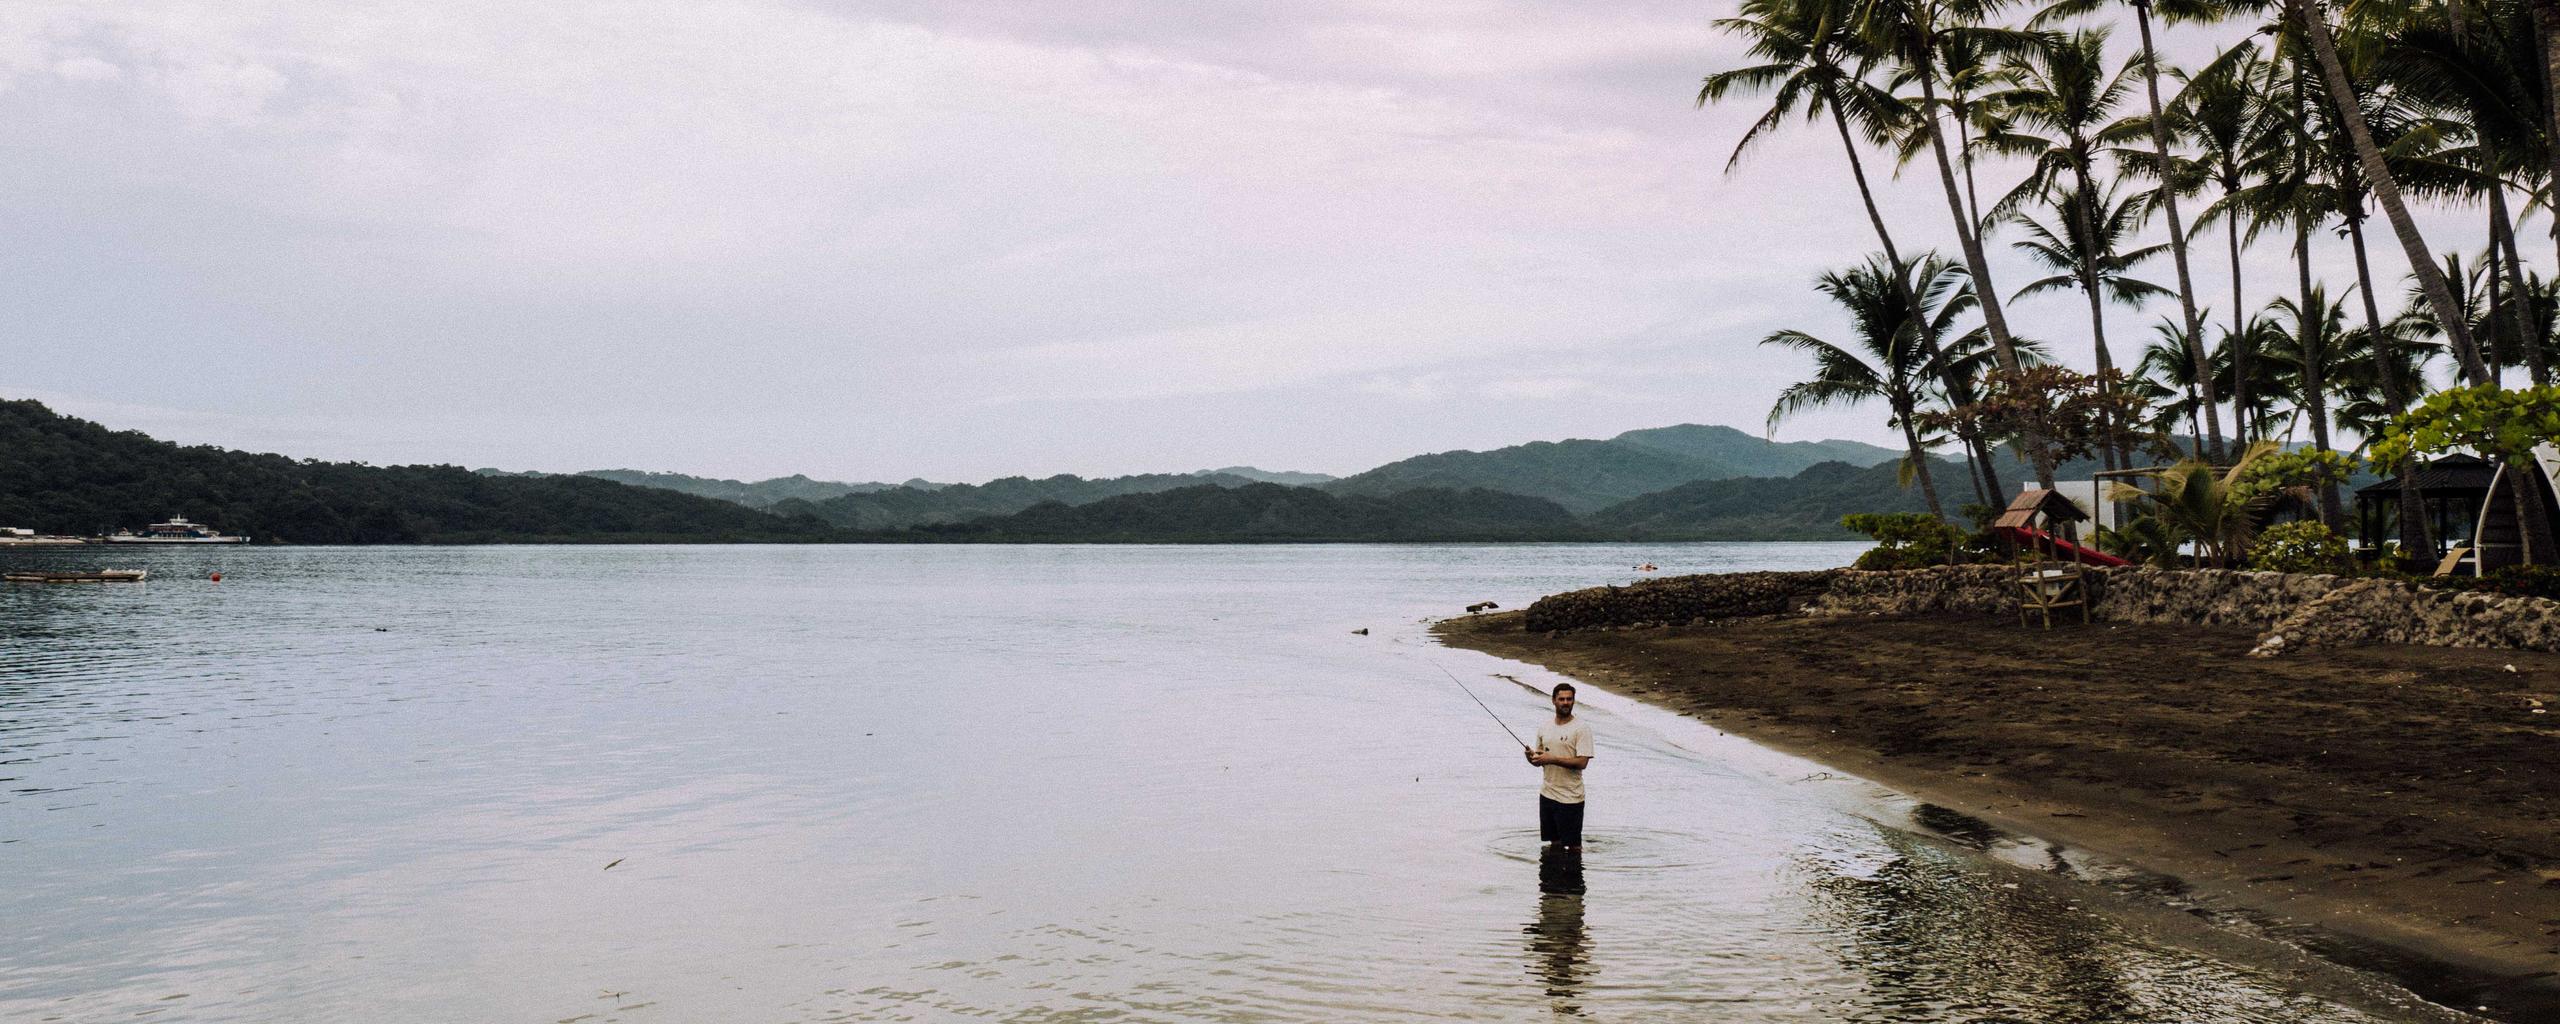 Man standing in Costa Rica lake fishing 